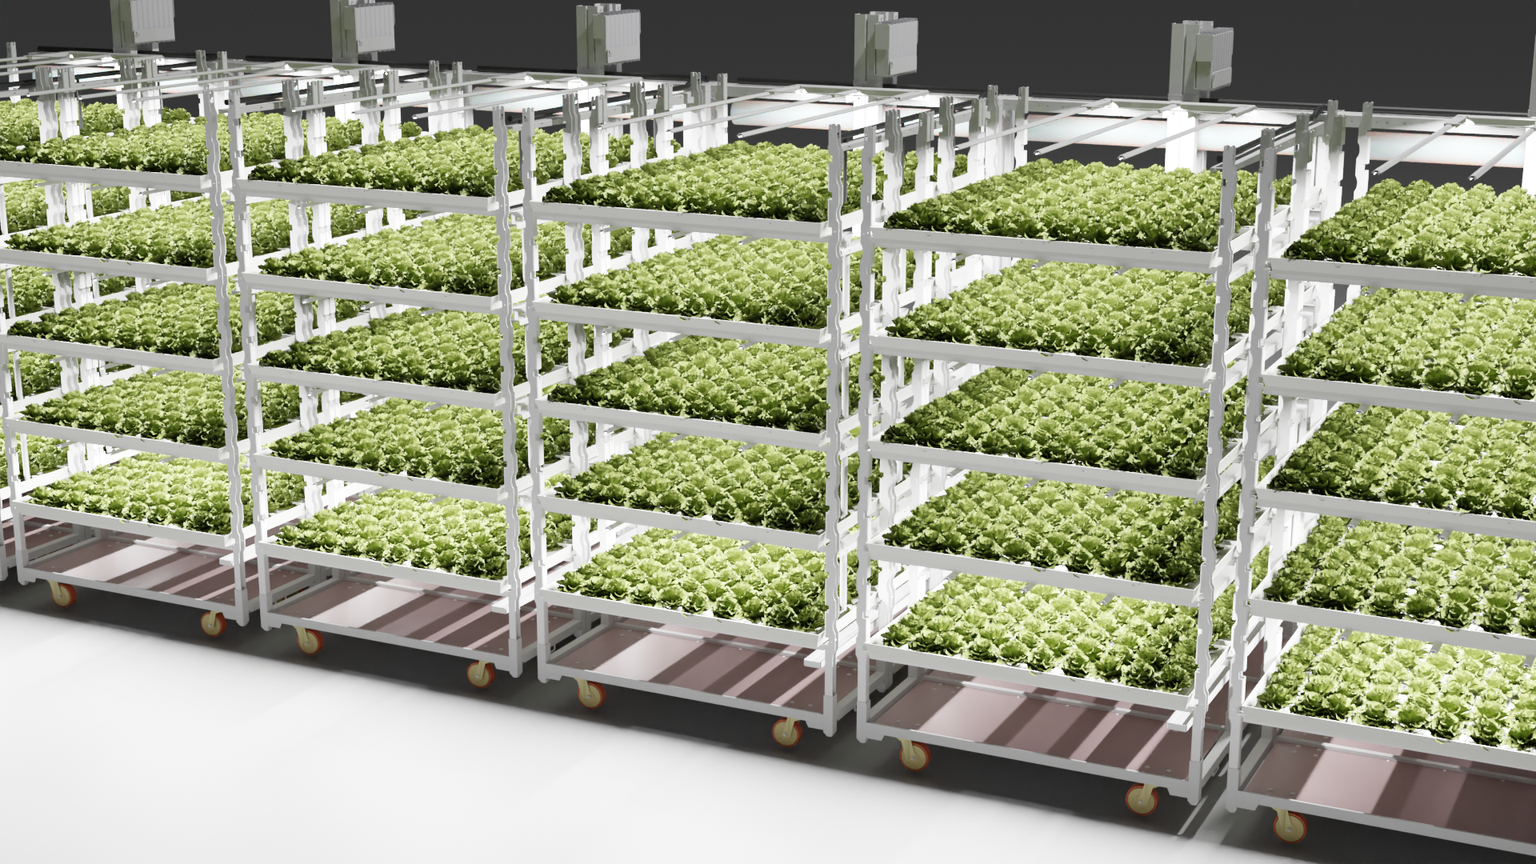 Vertical farming system